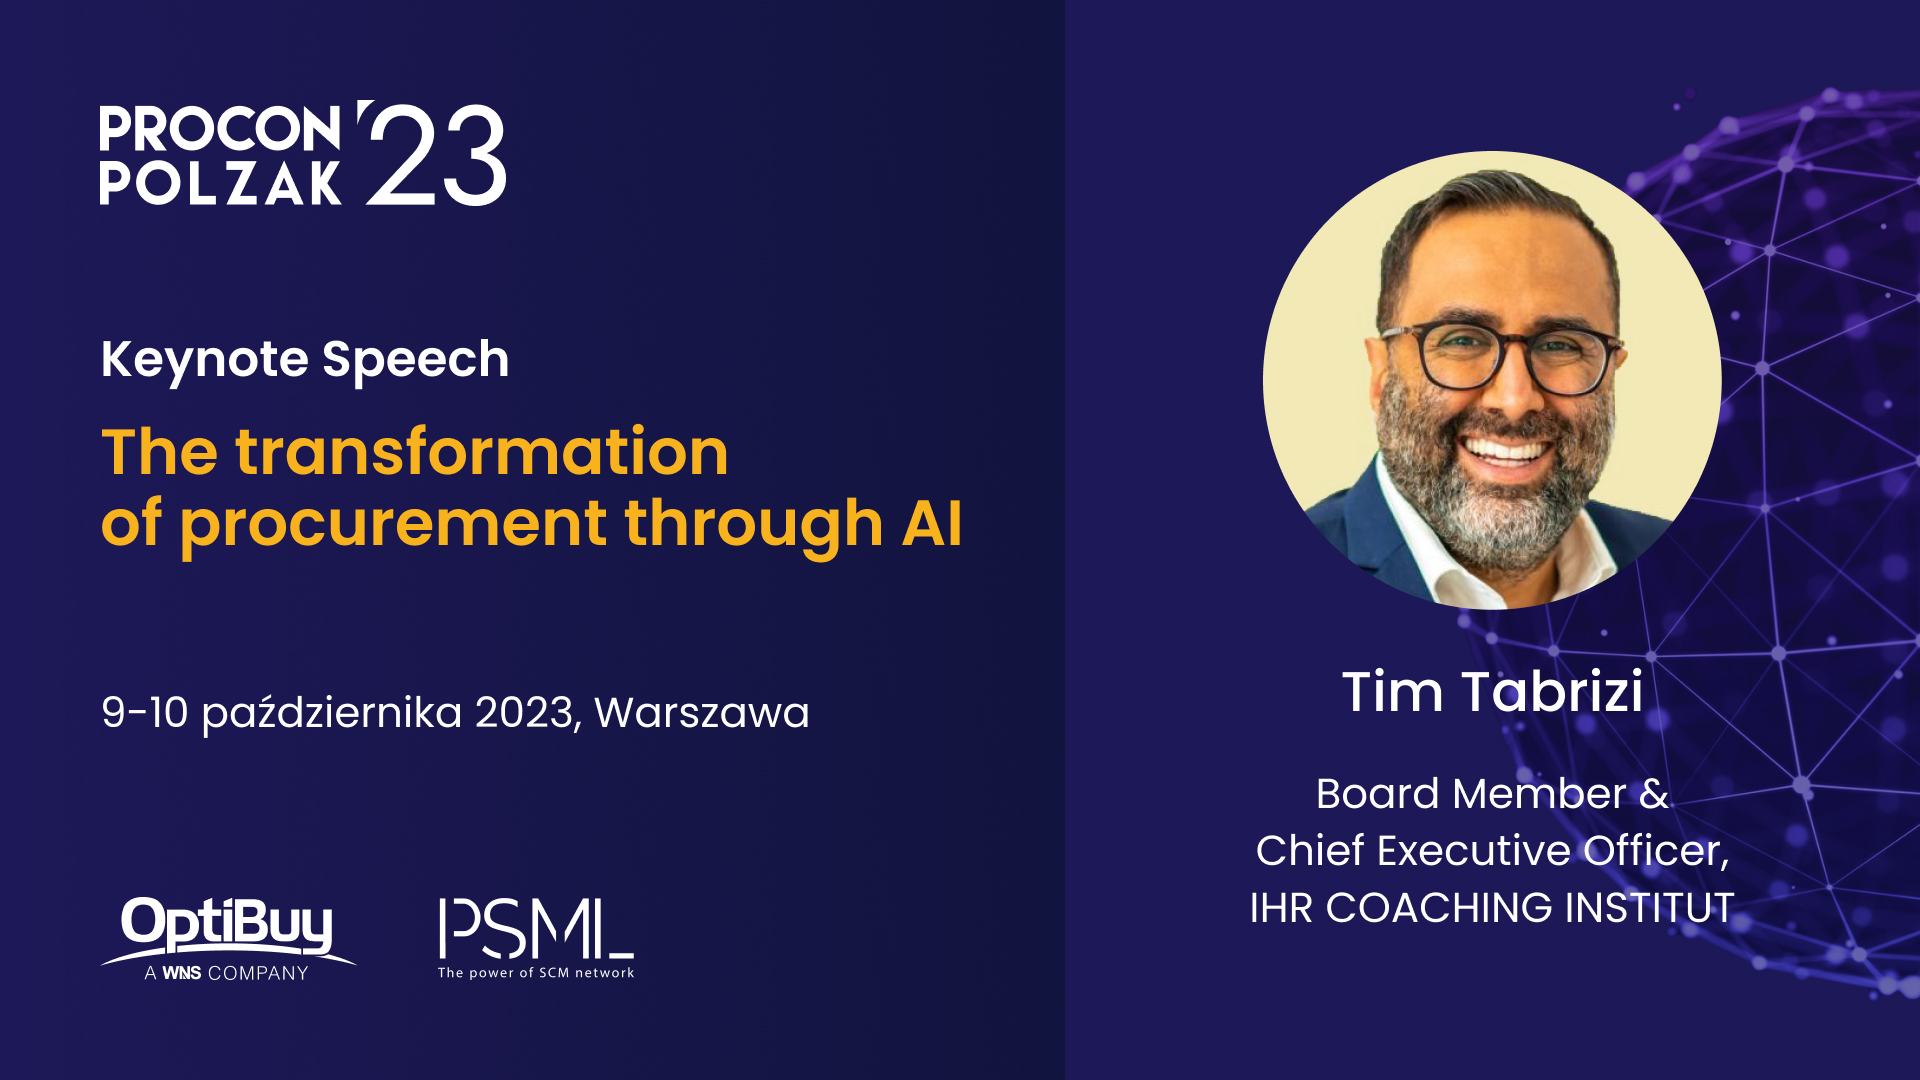 The transformation of procurement through AI